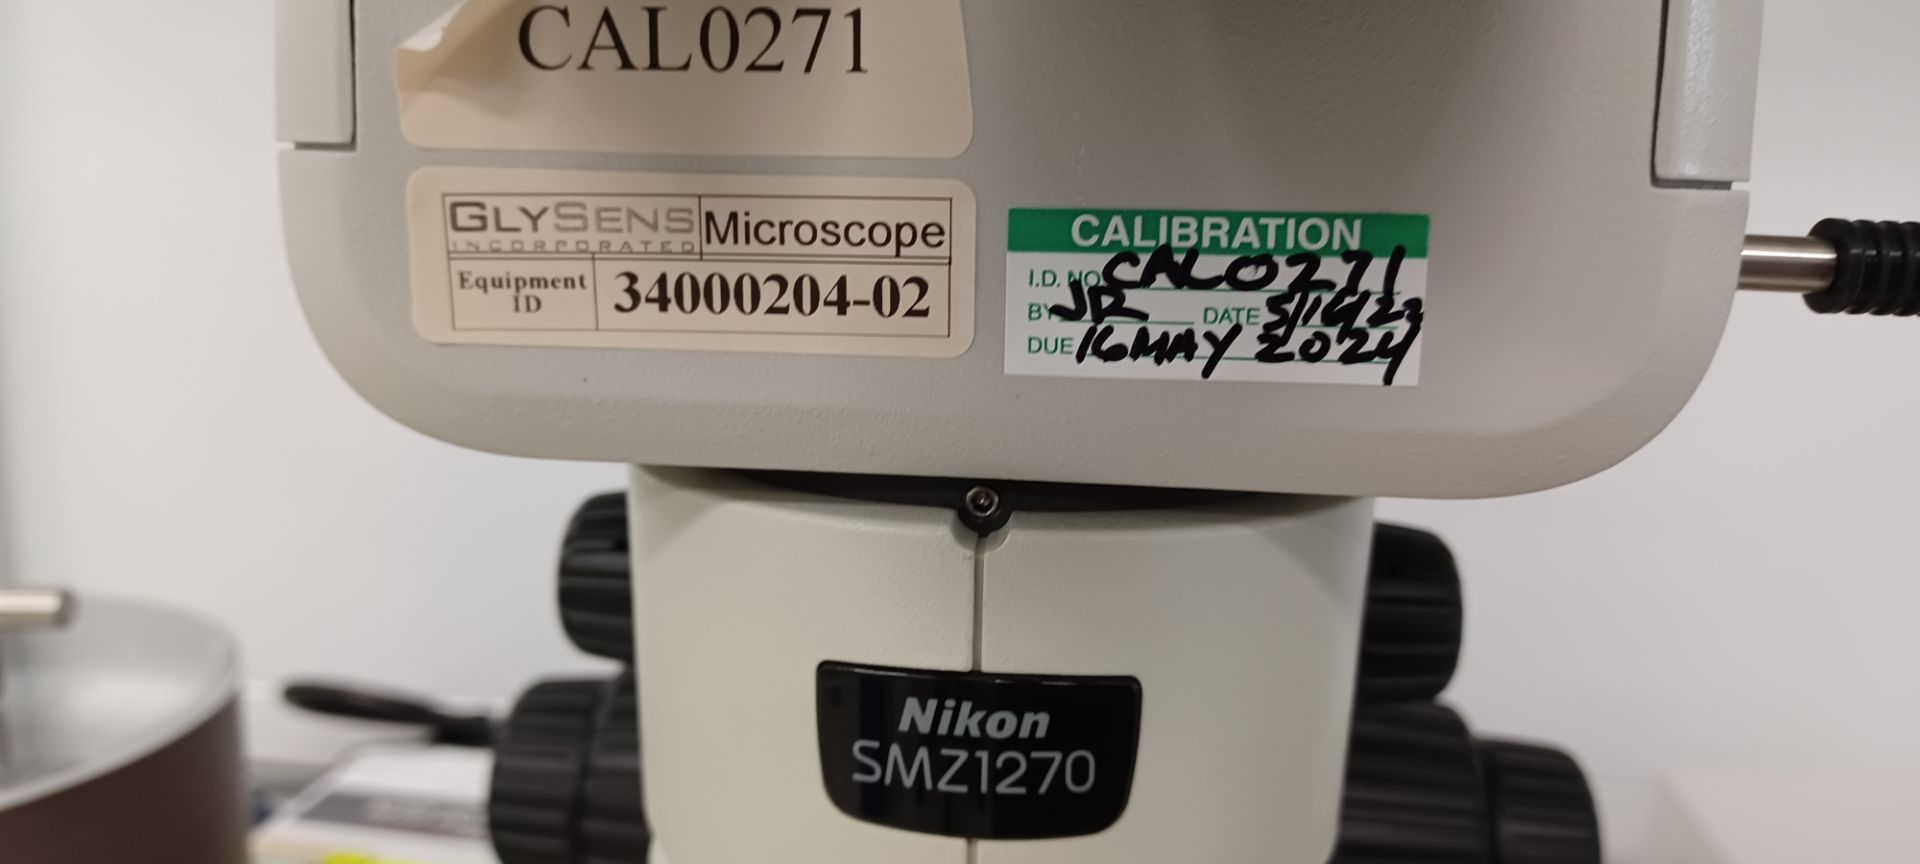 NIKON SMZ1270 MICROSCOPE WITH BASE, CALIBRATED TIL 5/2024, /W COLE-PARMER ILLUMINATOR - Image 6 of 8